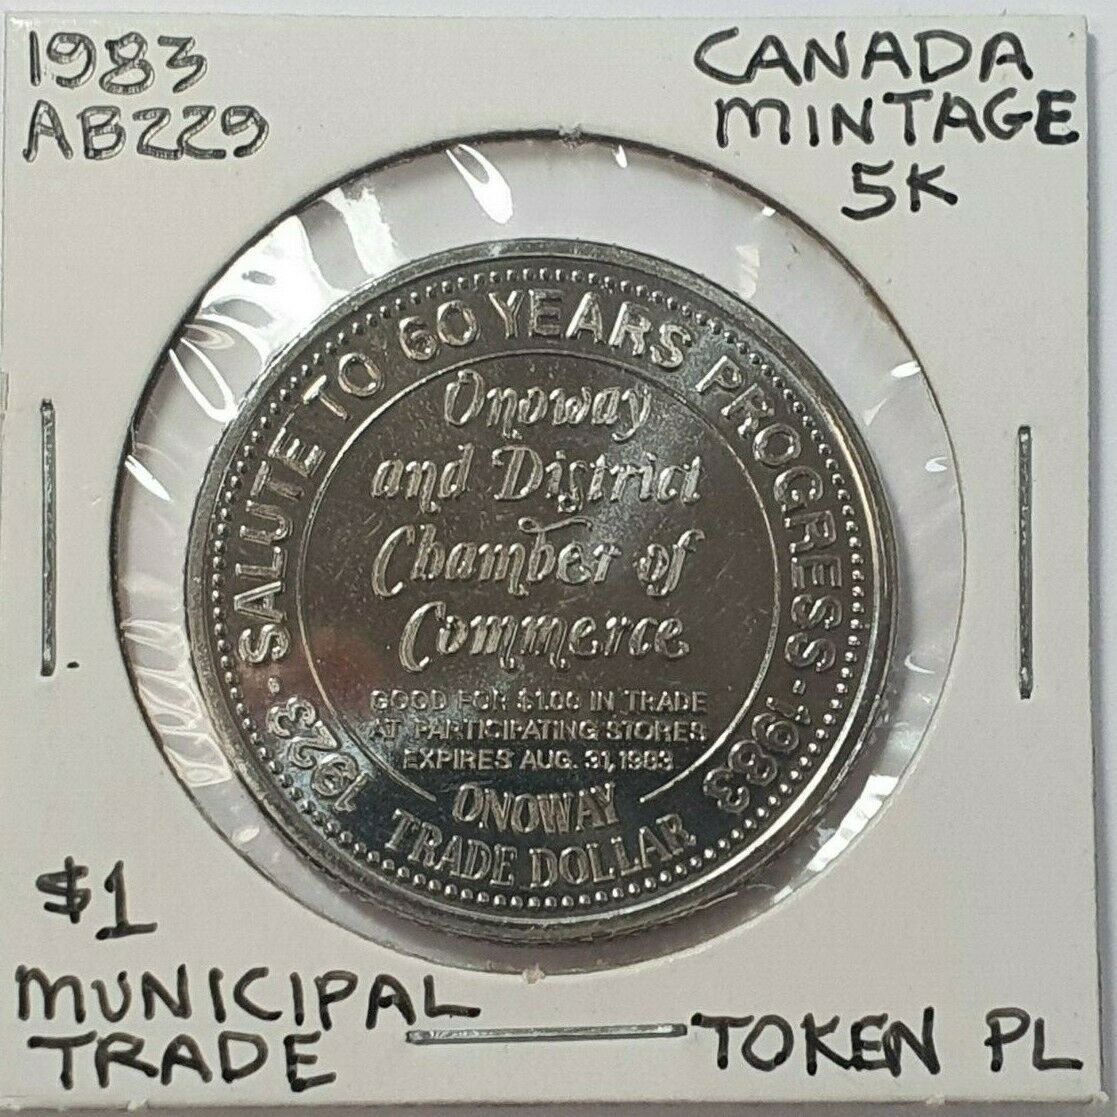 1983 Onoway Alberta $1 Hub Of The Highway Dollar Token, Proof Like